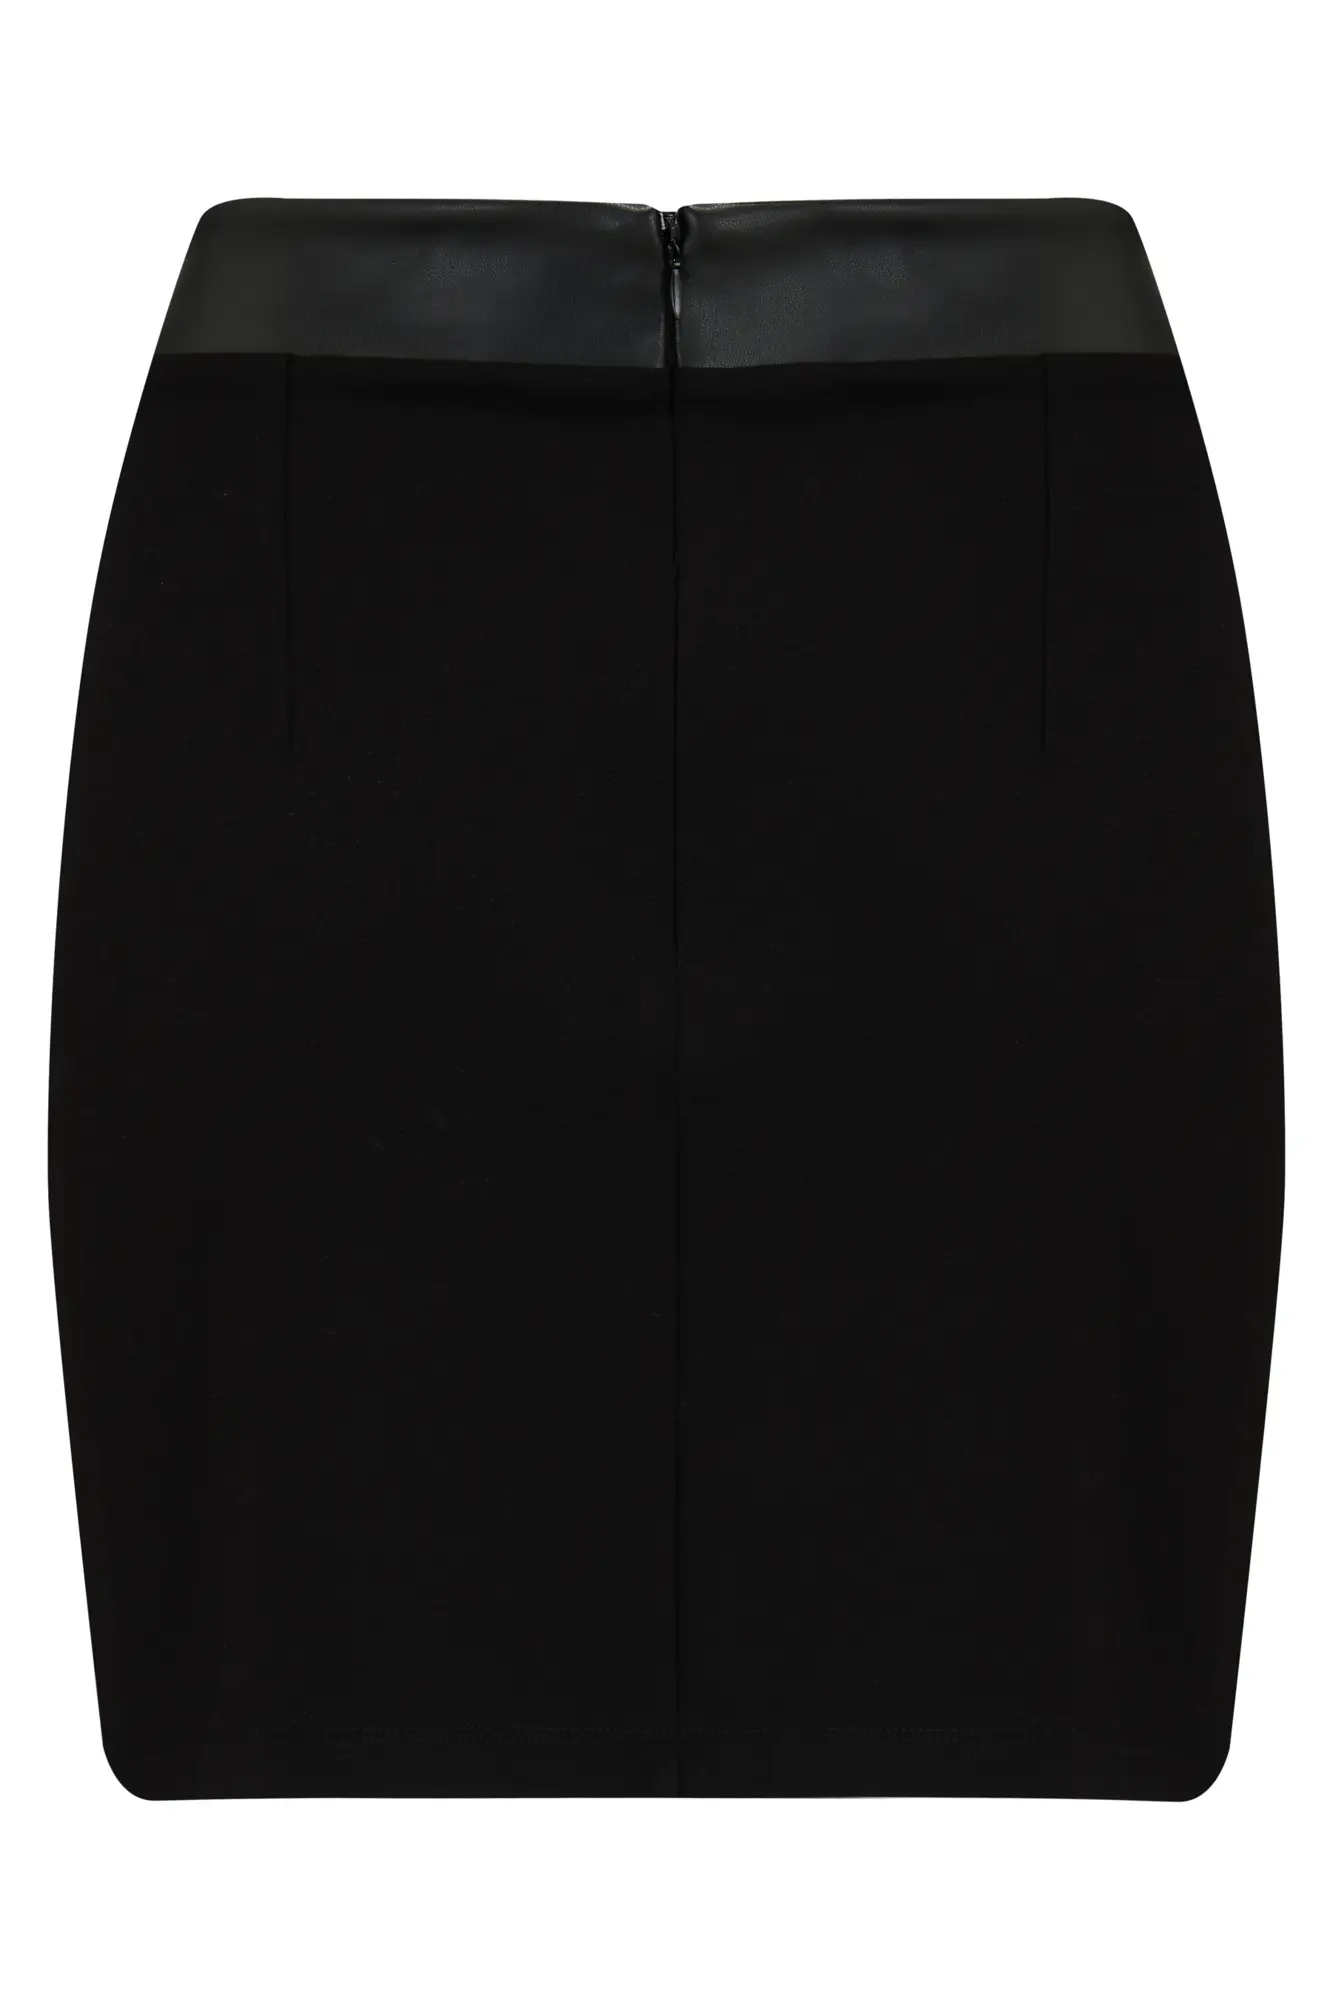 Vintage Chic for Topvintage | Ellie Crepe Pencil Skirt in Black